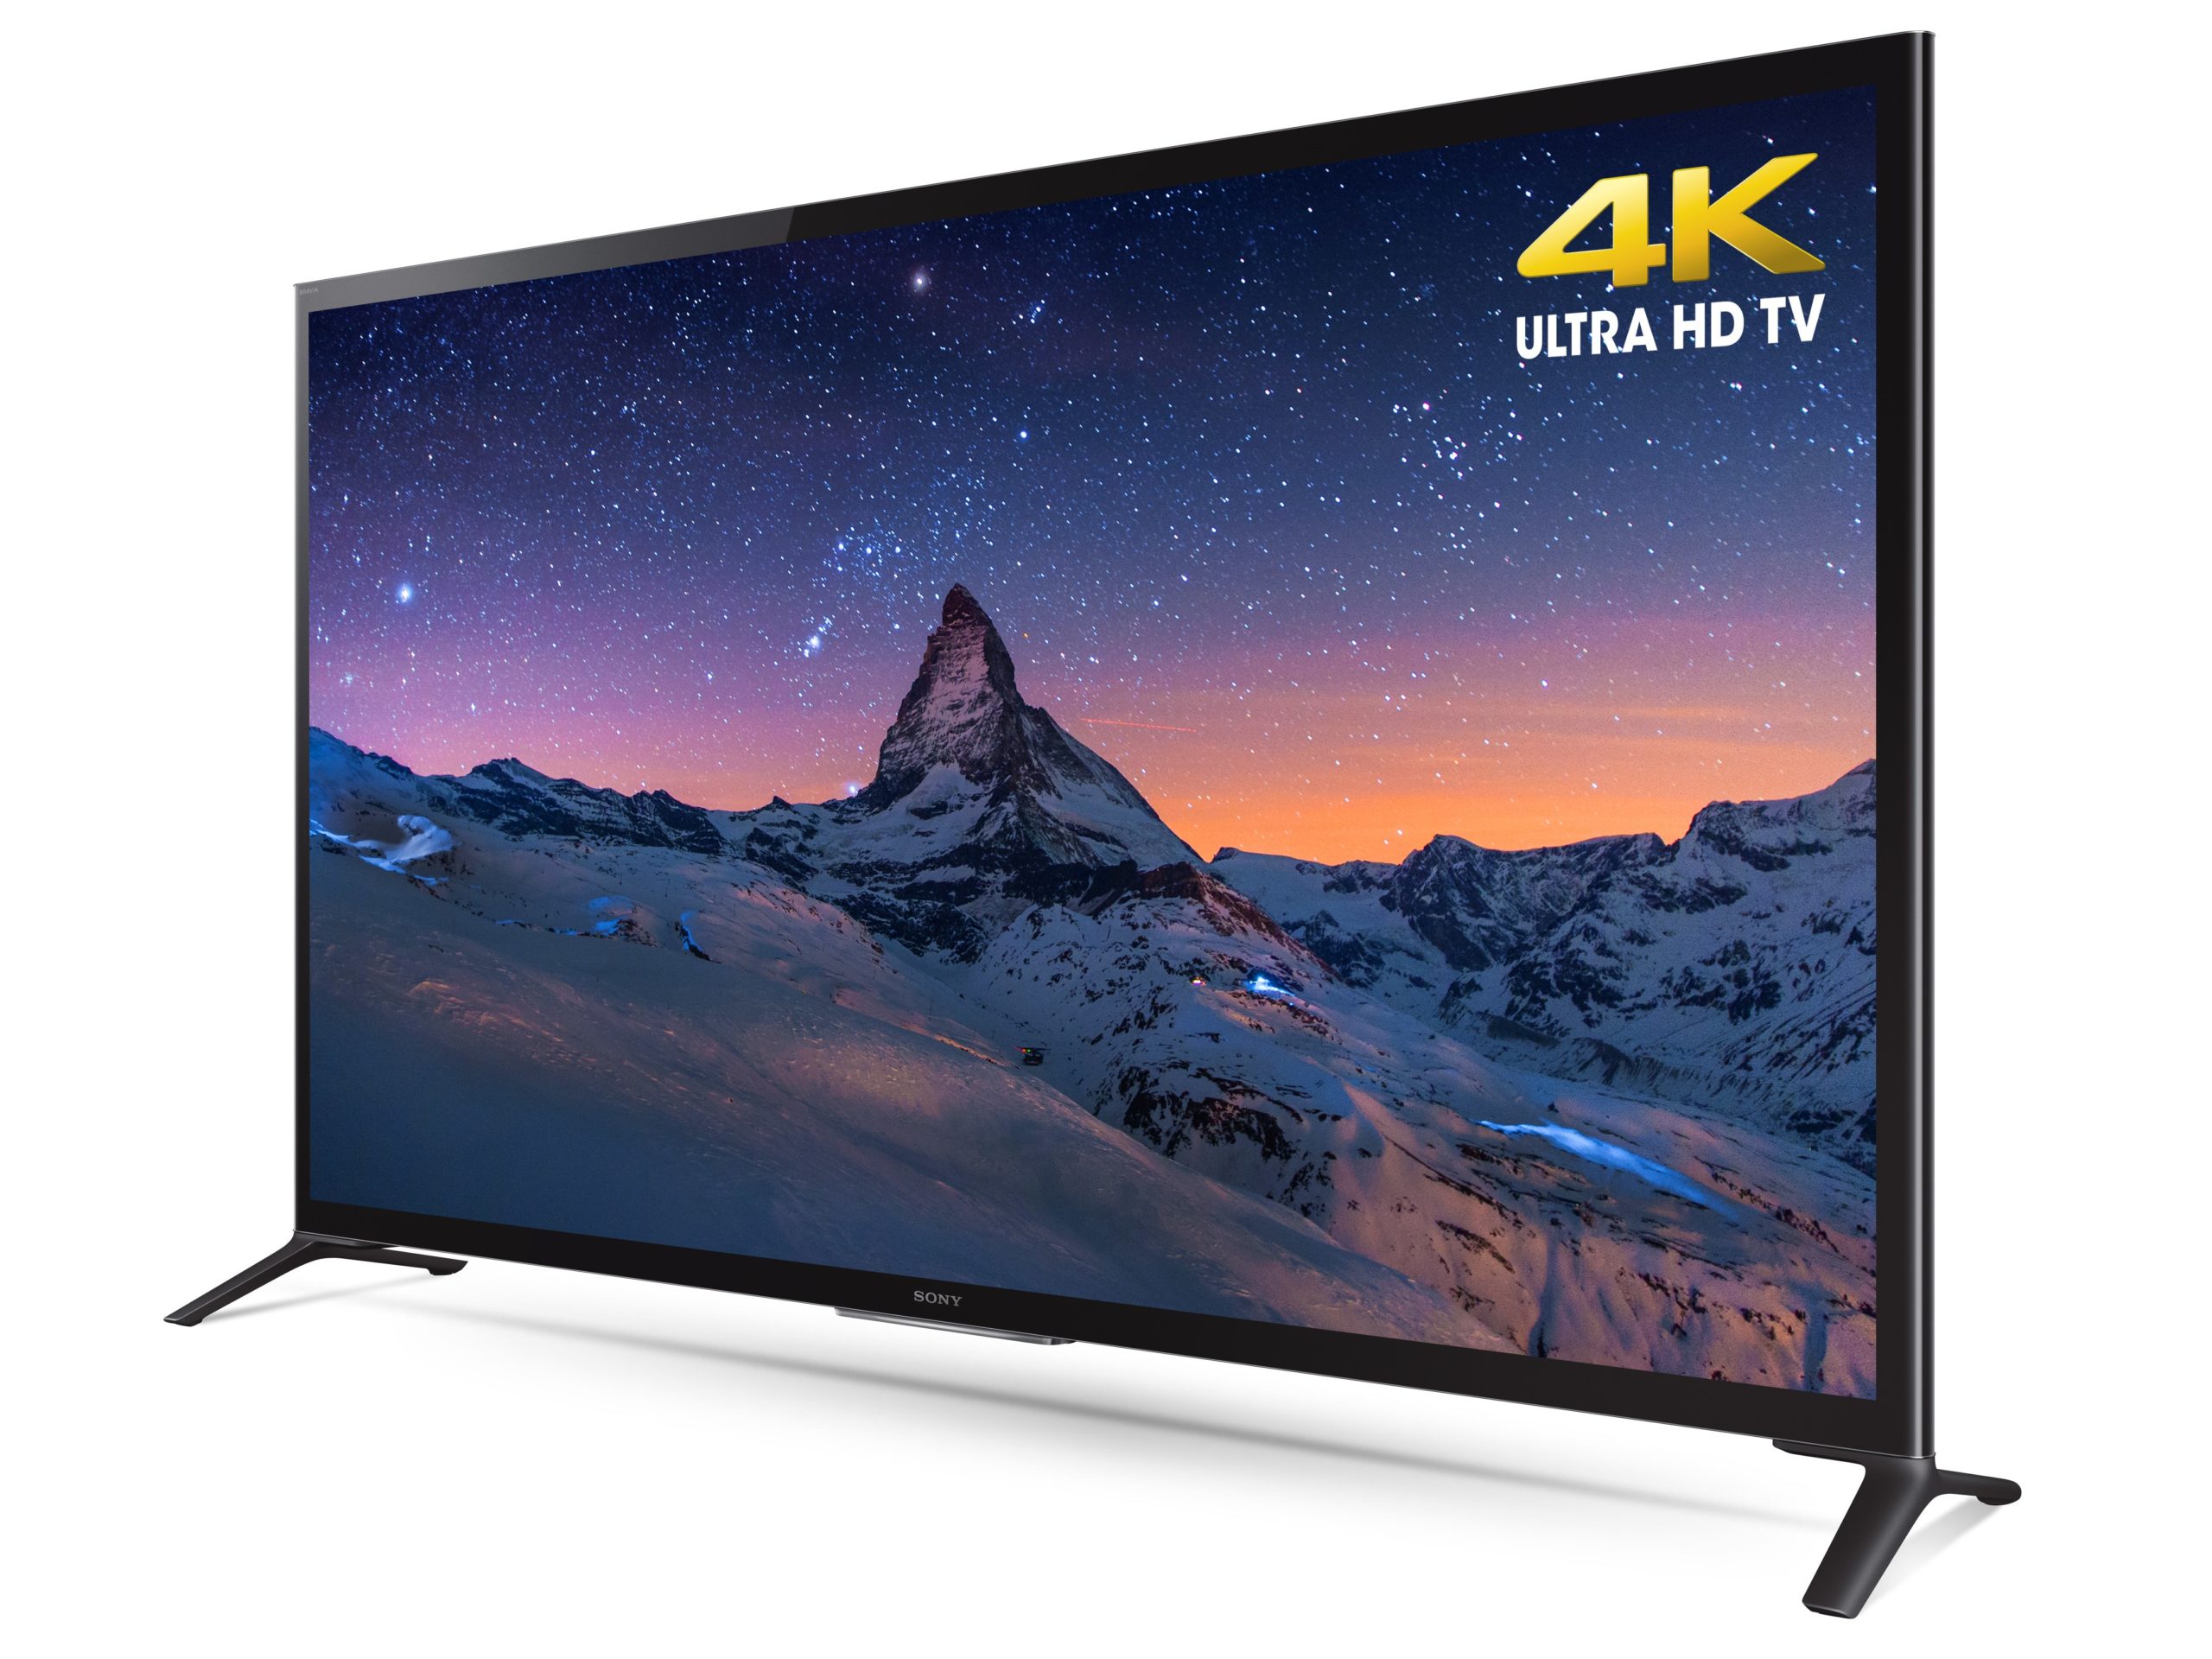 Sony Xbr 65x950b Flagship 4k Ultra Hd Tv 4 3jpg Scaled 